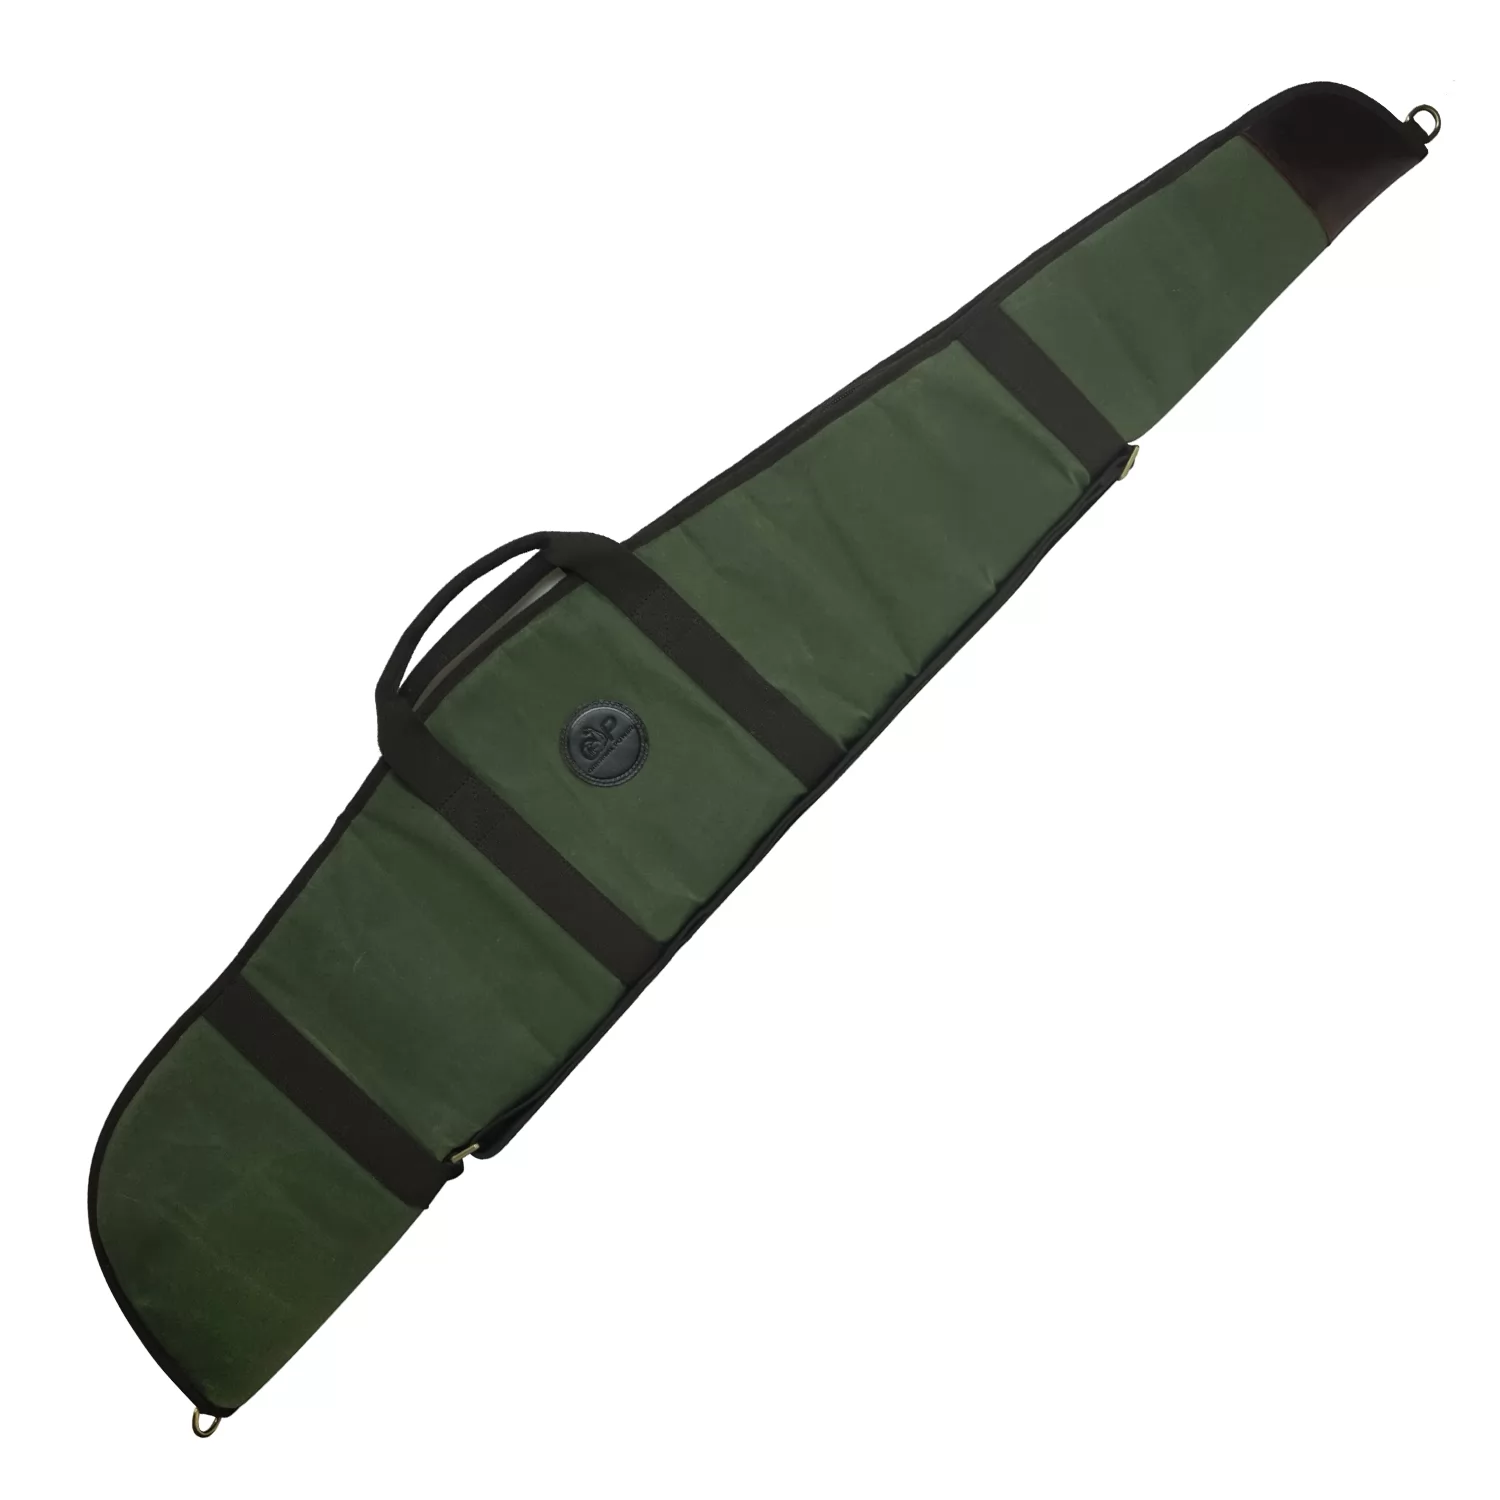 Padded Scoped Rifle Bag for Hunting Shooting Range Canvas Rifle Gun Case Bag 